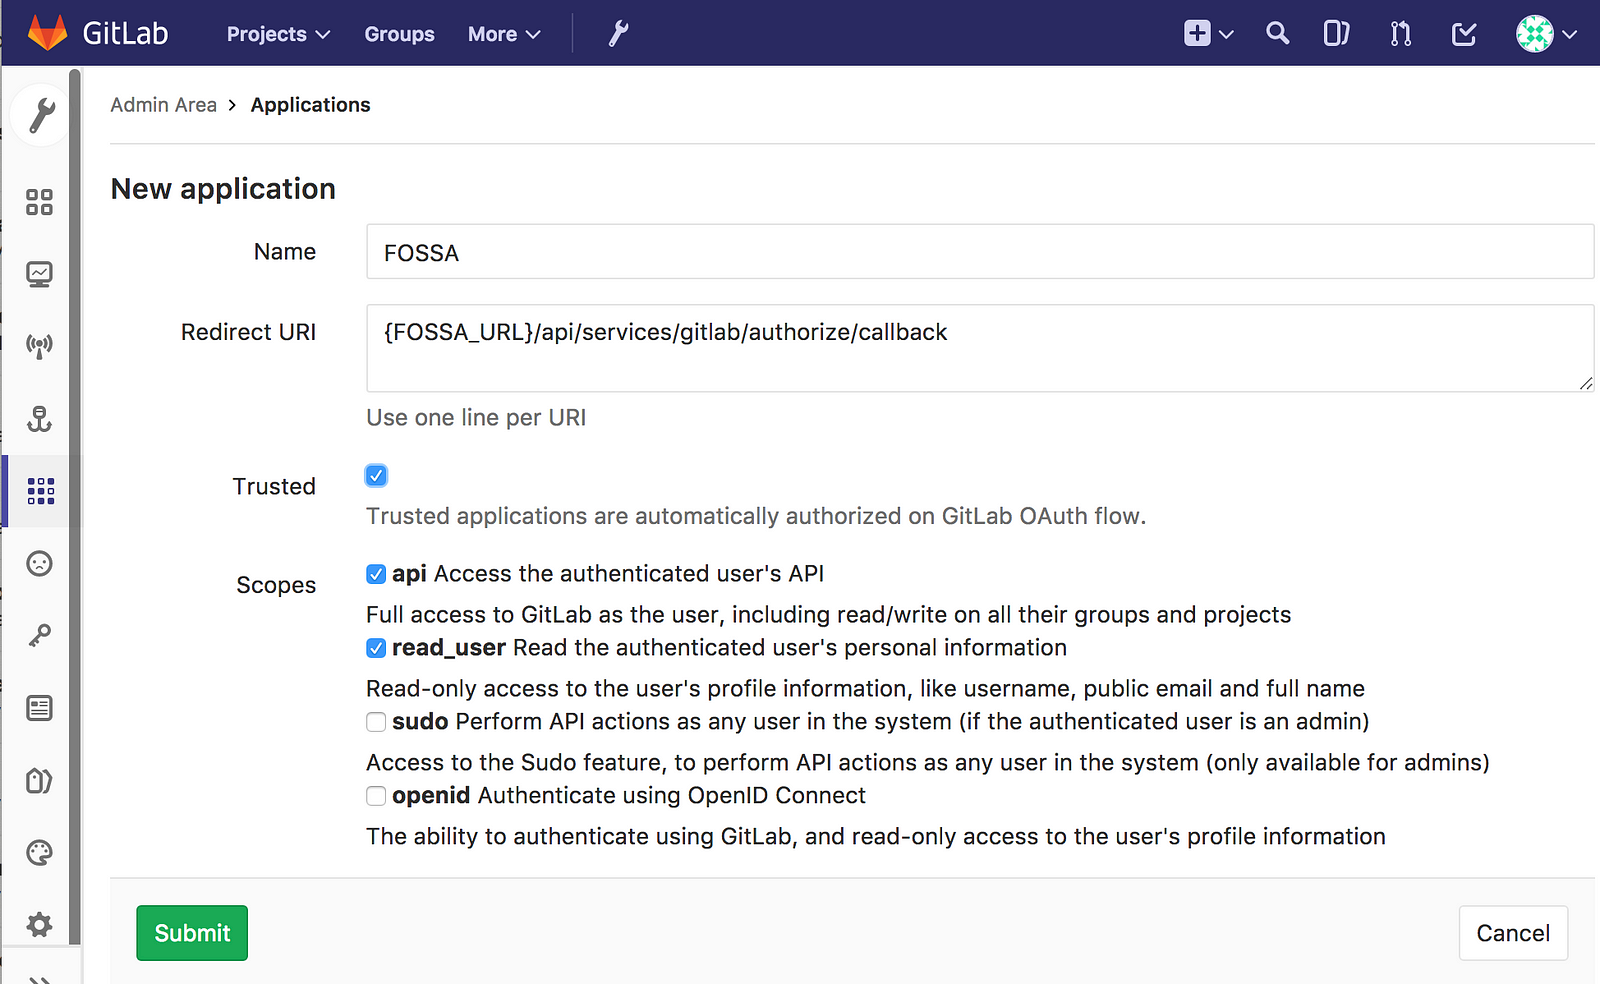 FOSSA now integrates with GitLab Enterprise.